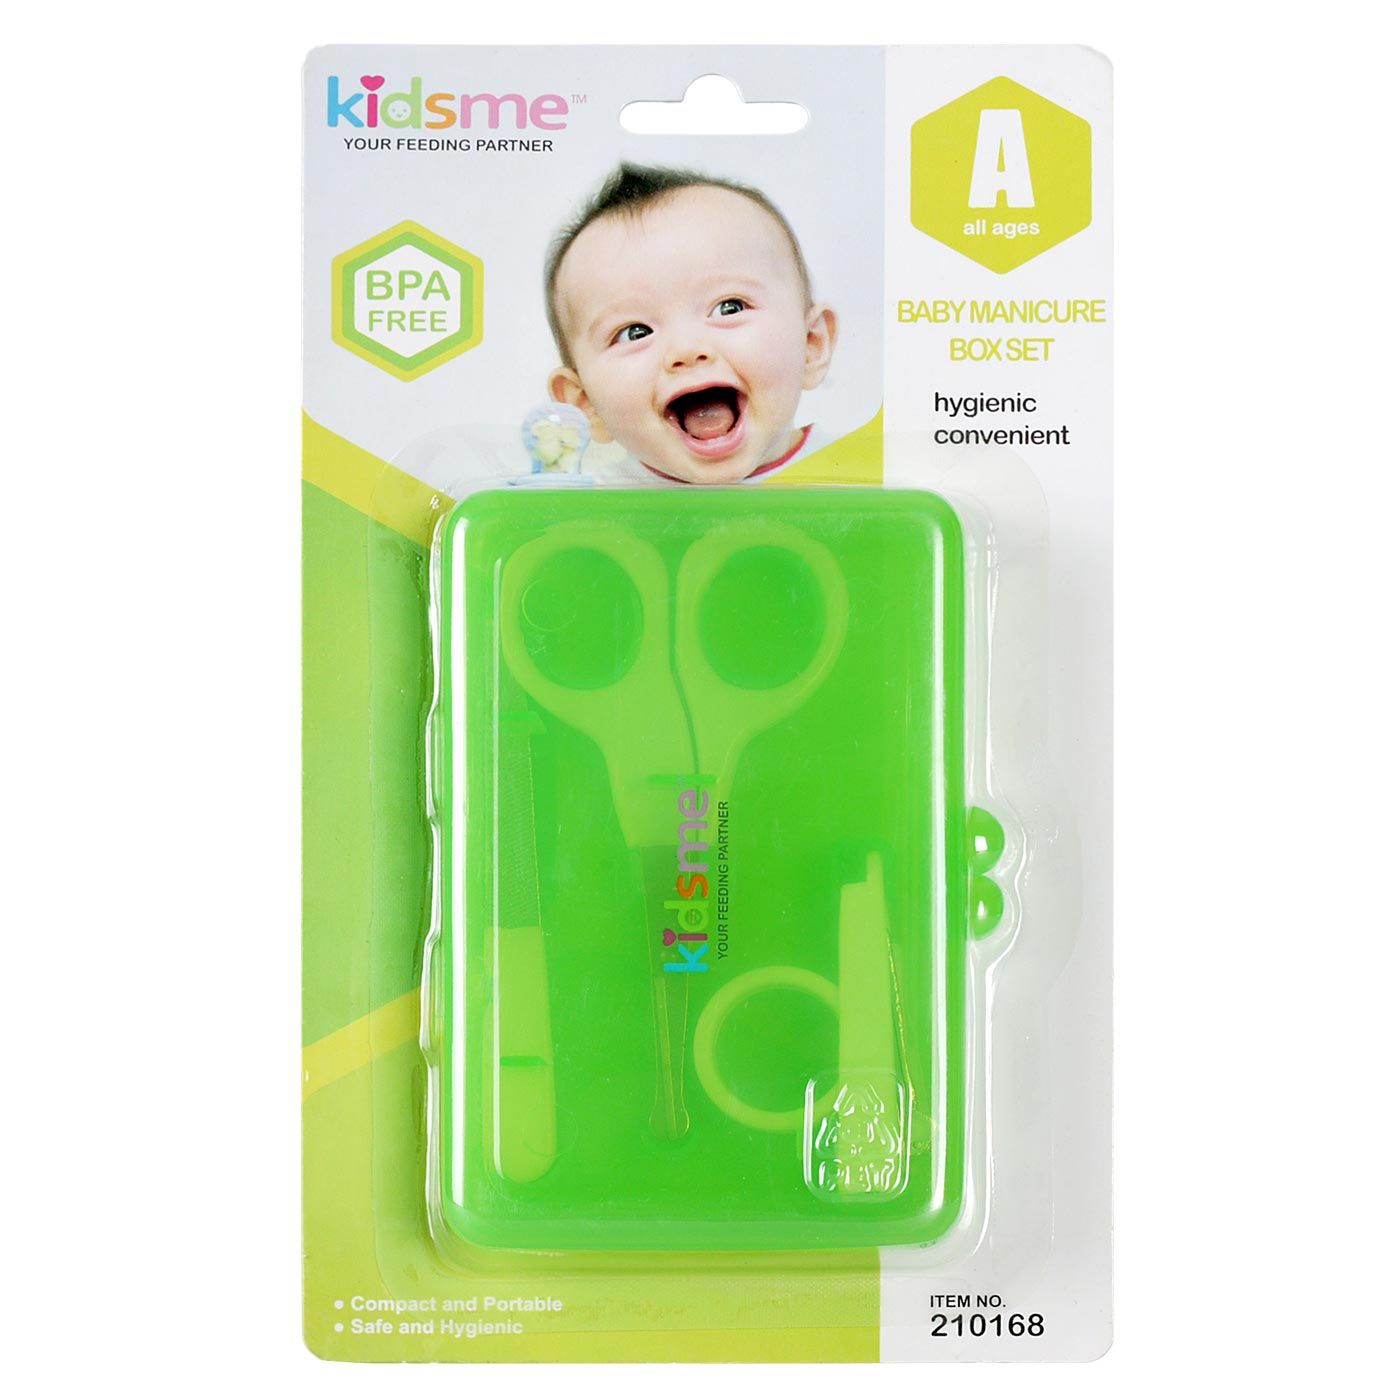 Kidsme Baby Manicure Box Set - 1